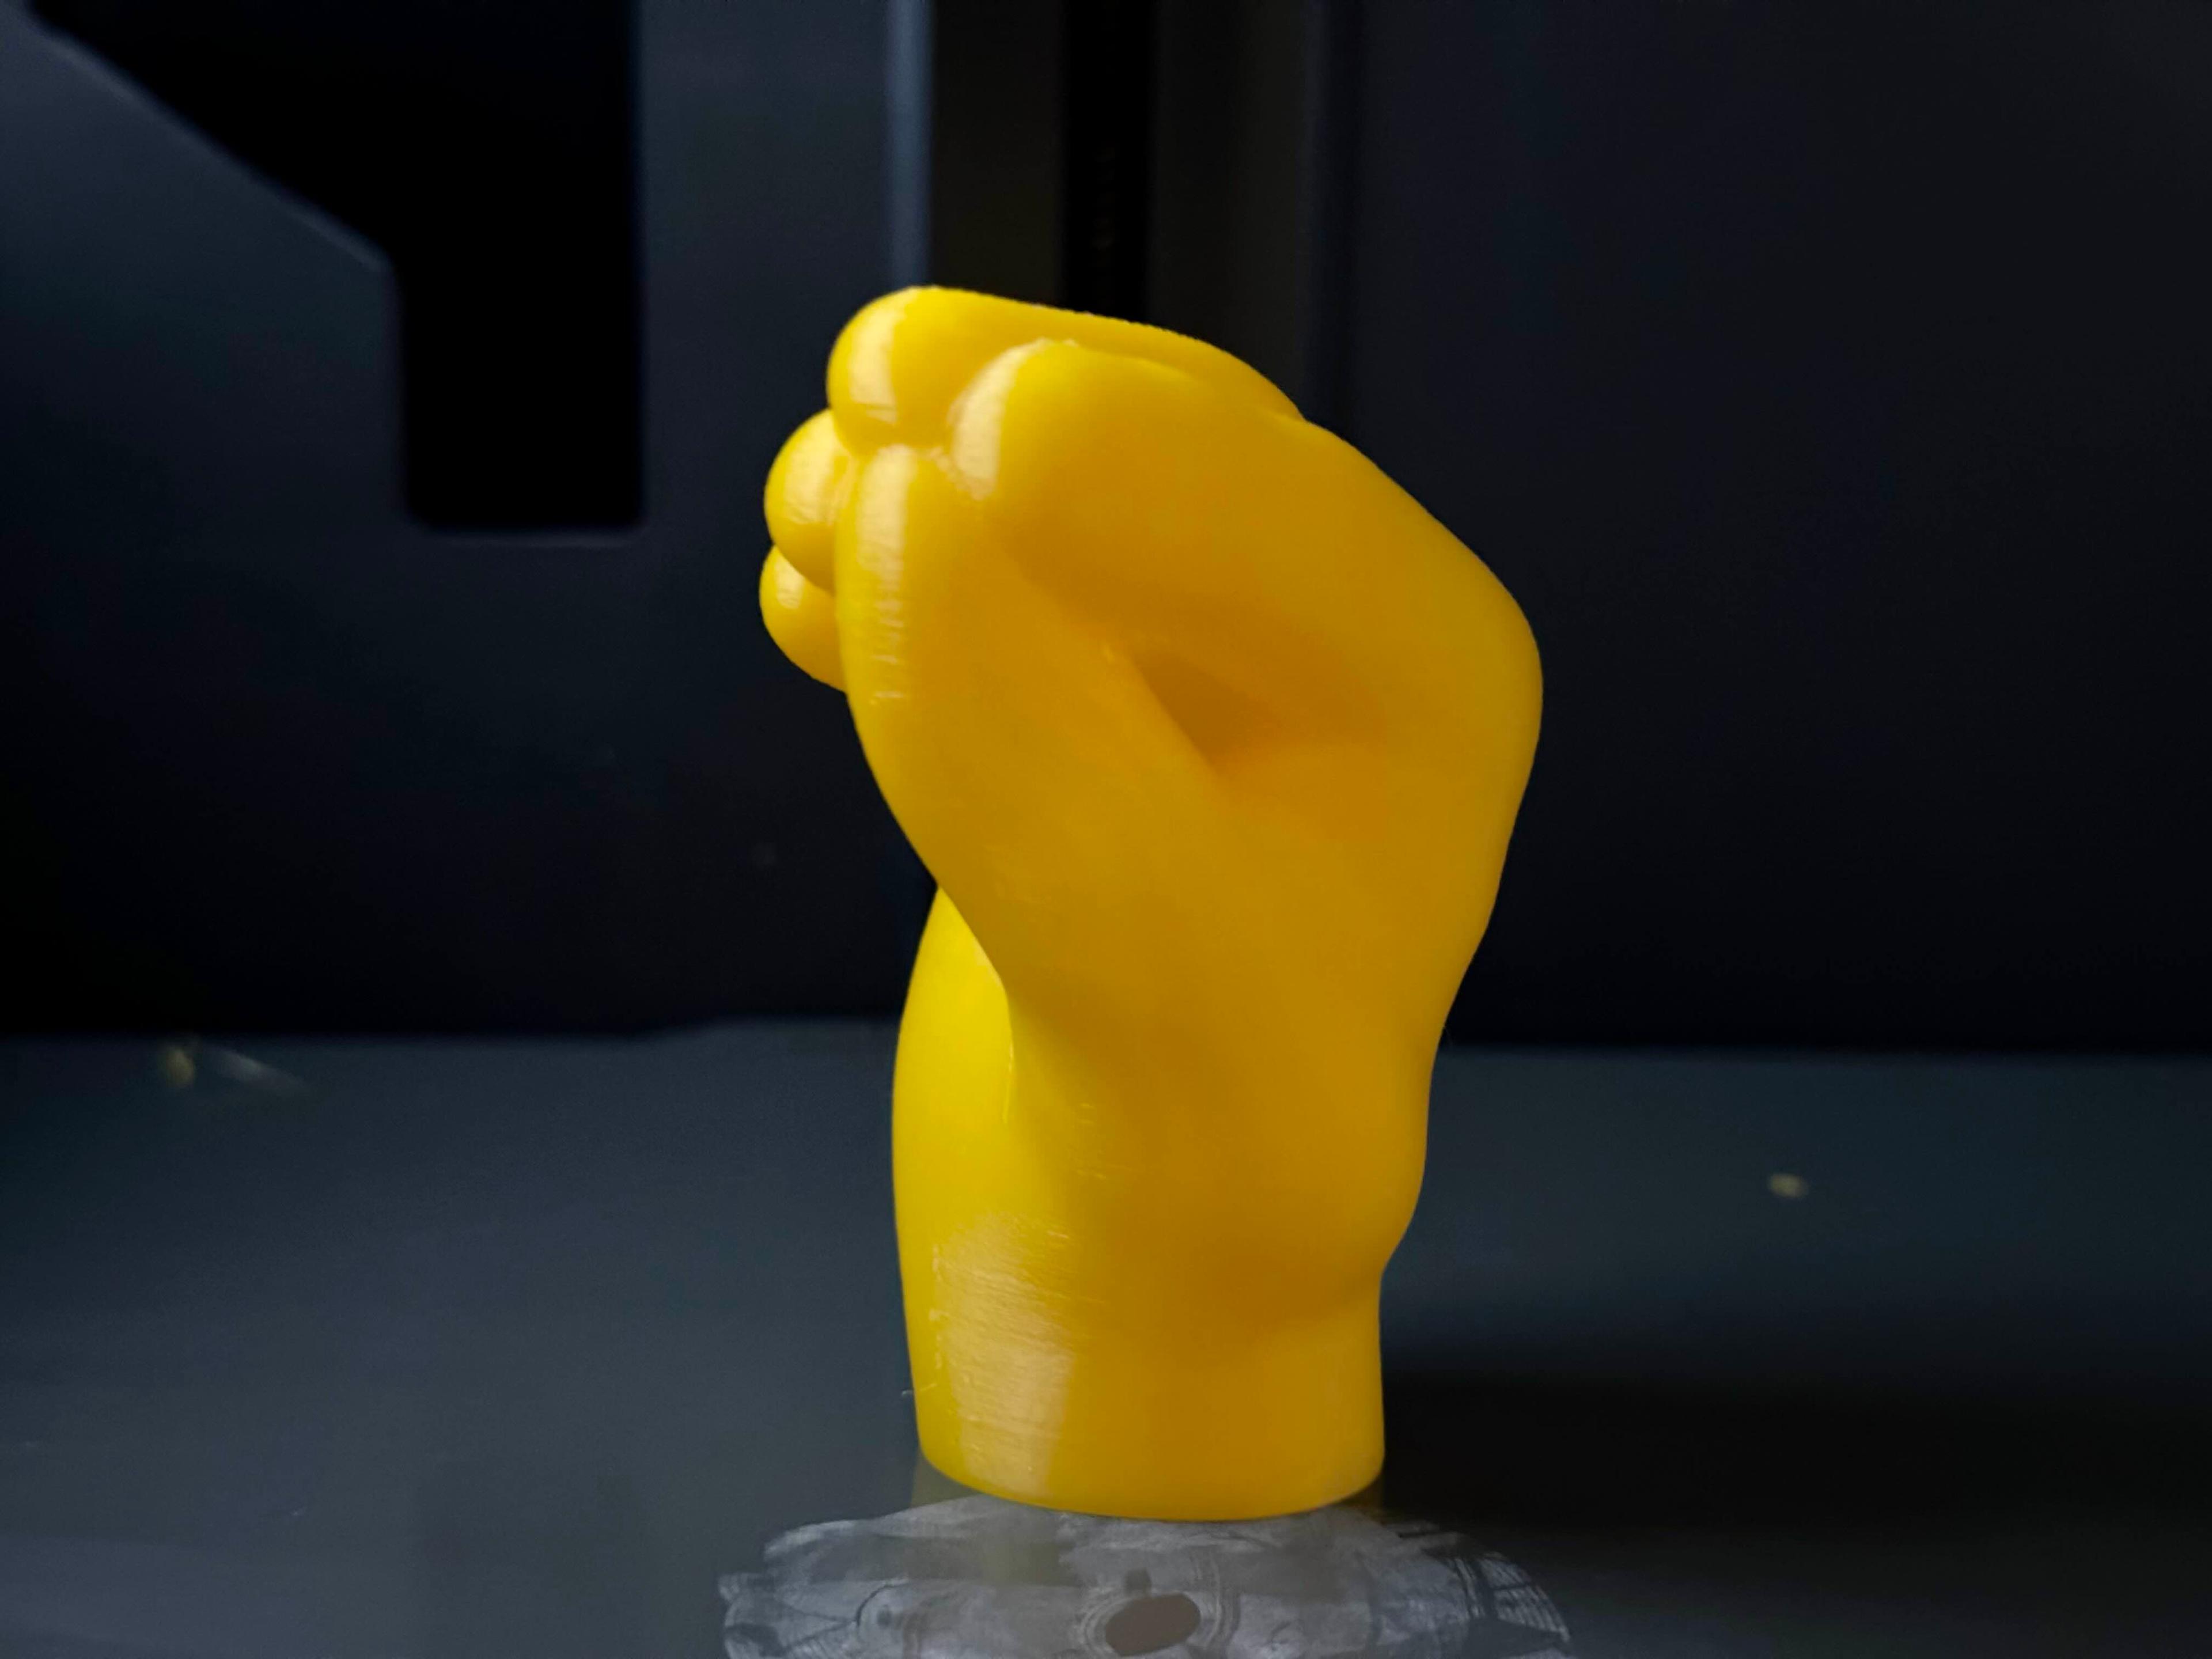 EMOJI HAND 🤌 PINCHED FINGERS / ITALIAN "MA CHE VUOI?!" GESTURE 3d model